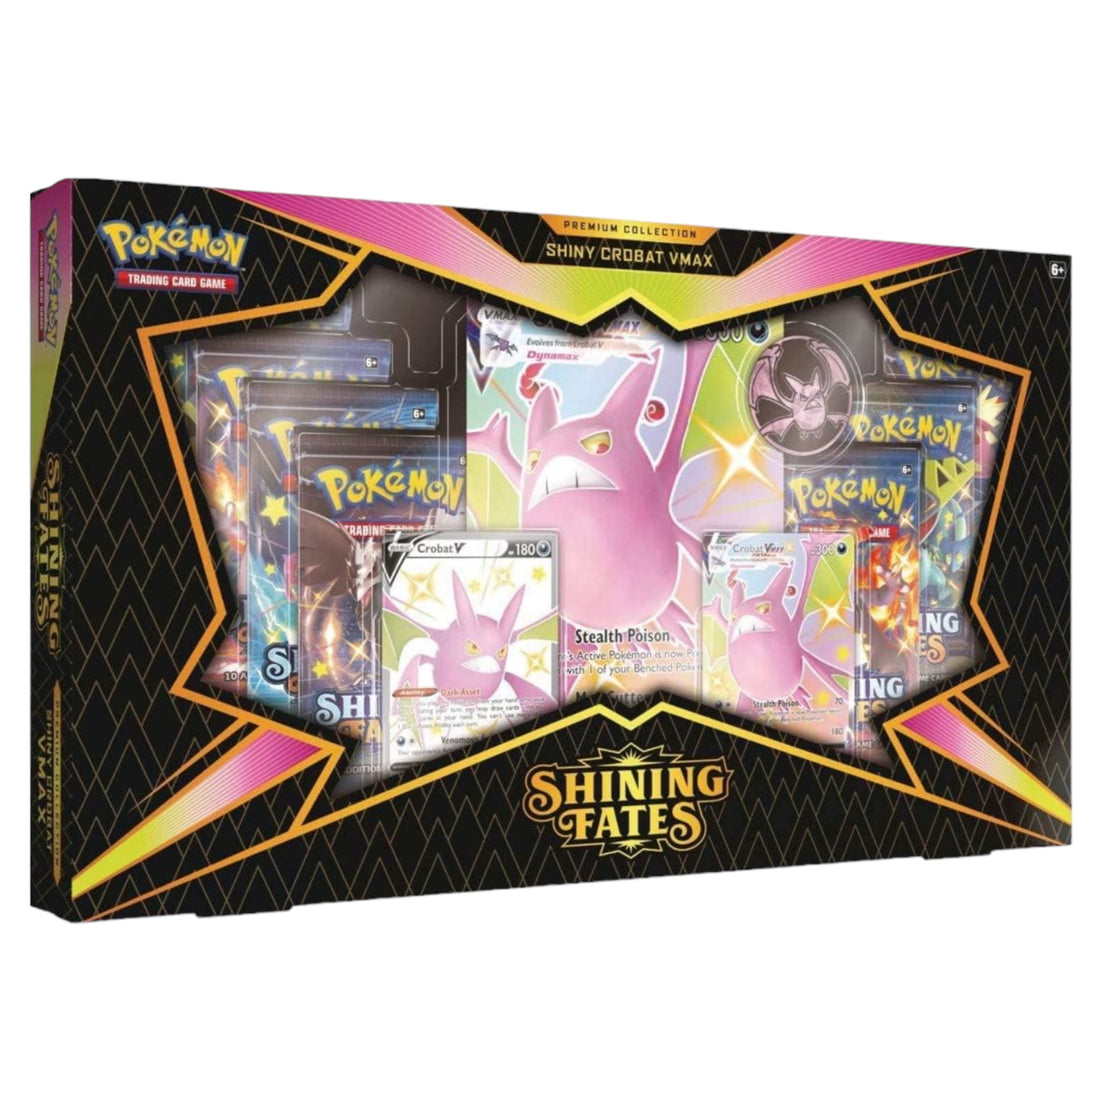 Pokémon Shining Fates Shiny Crobat VMAX Premium Collection Box